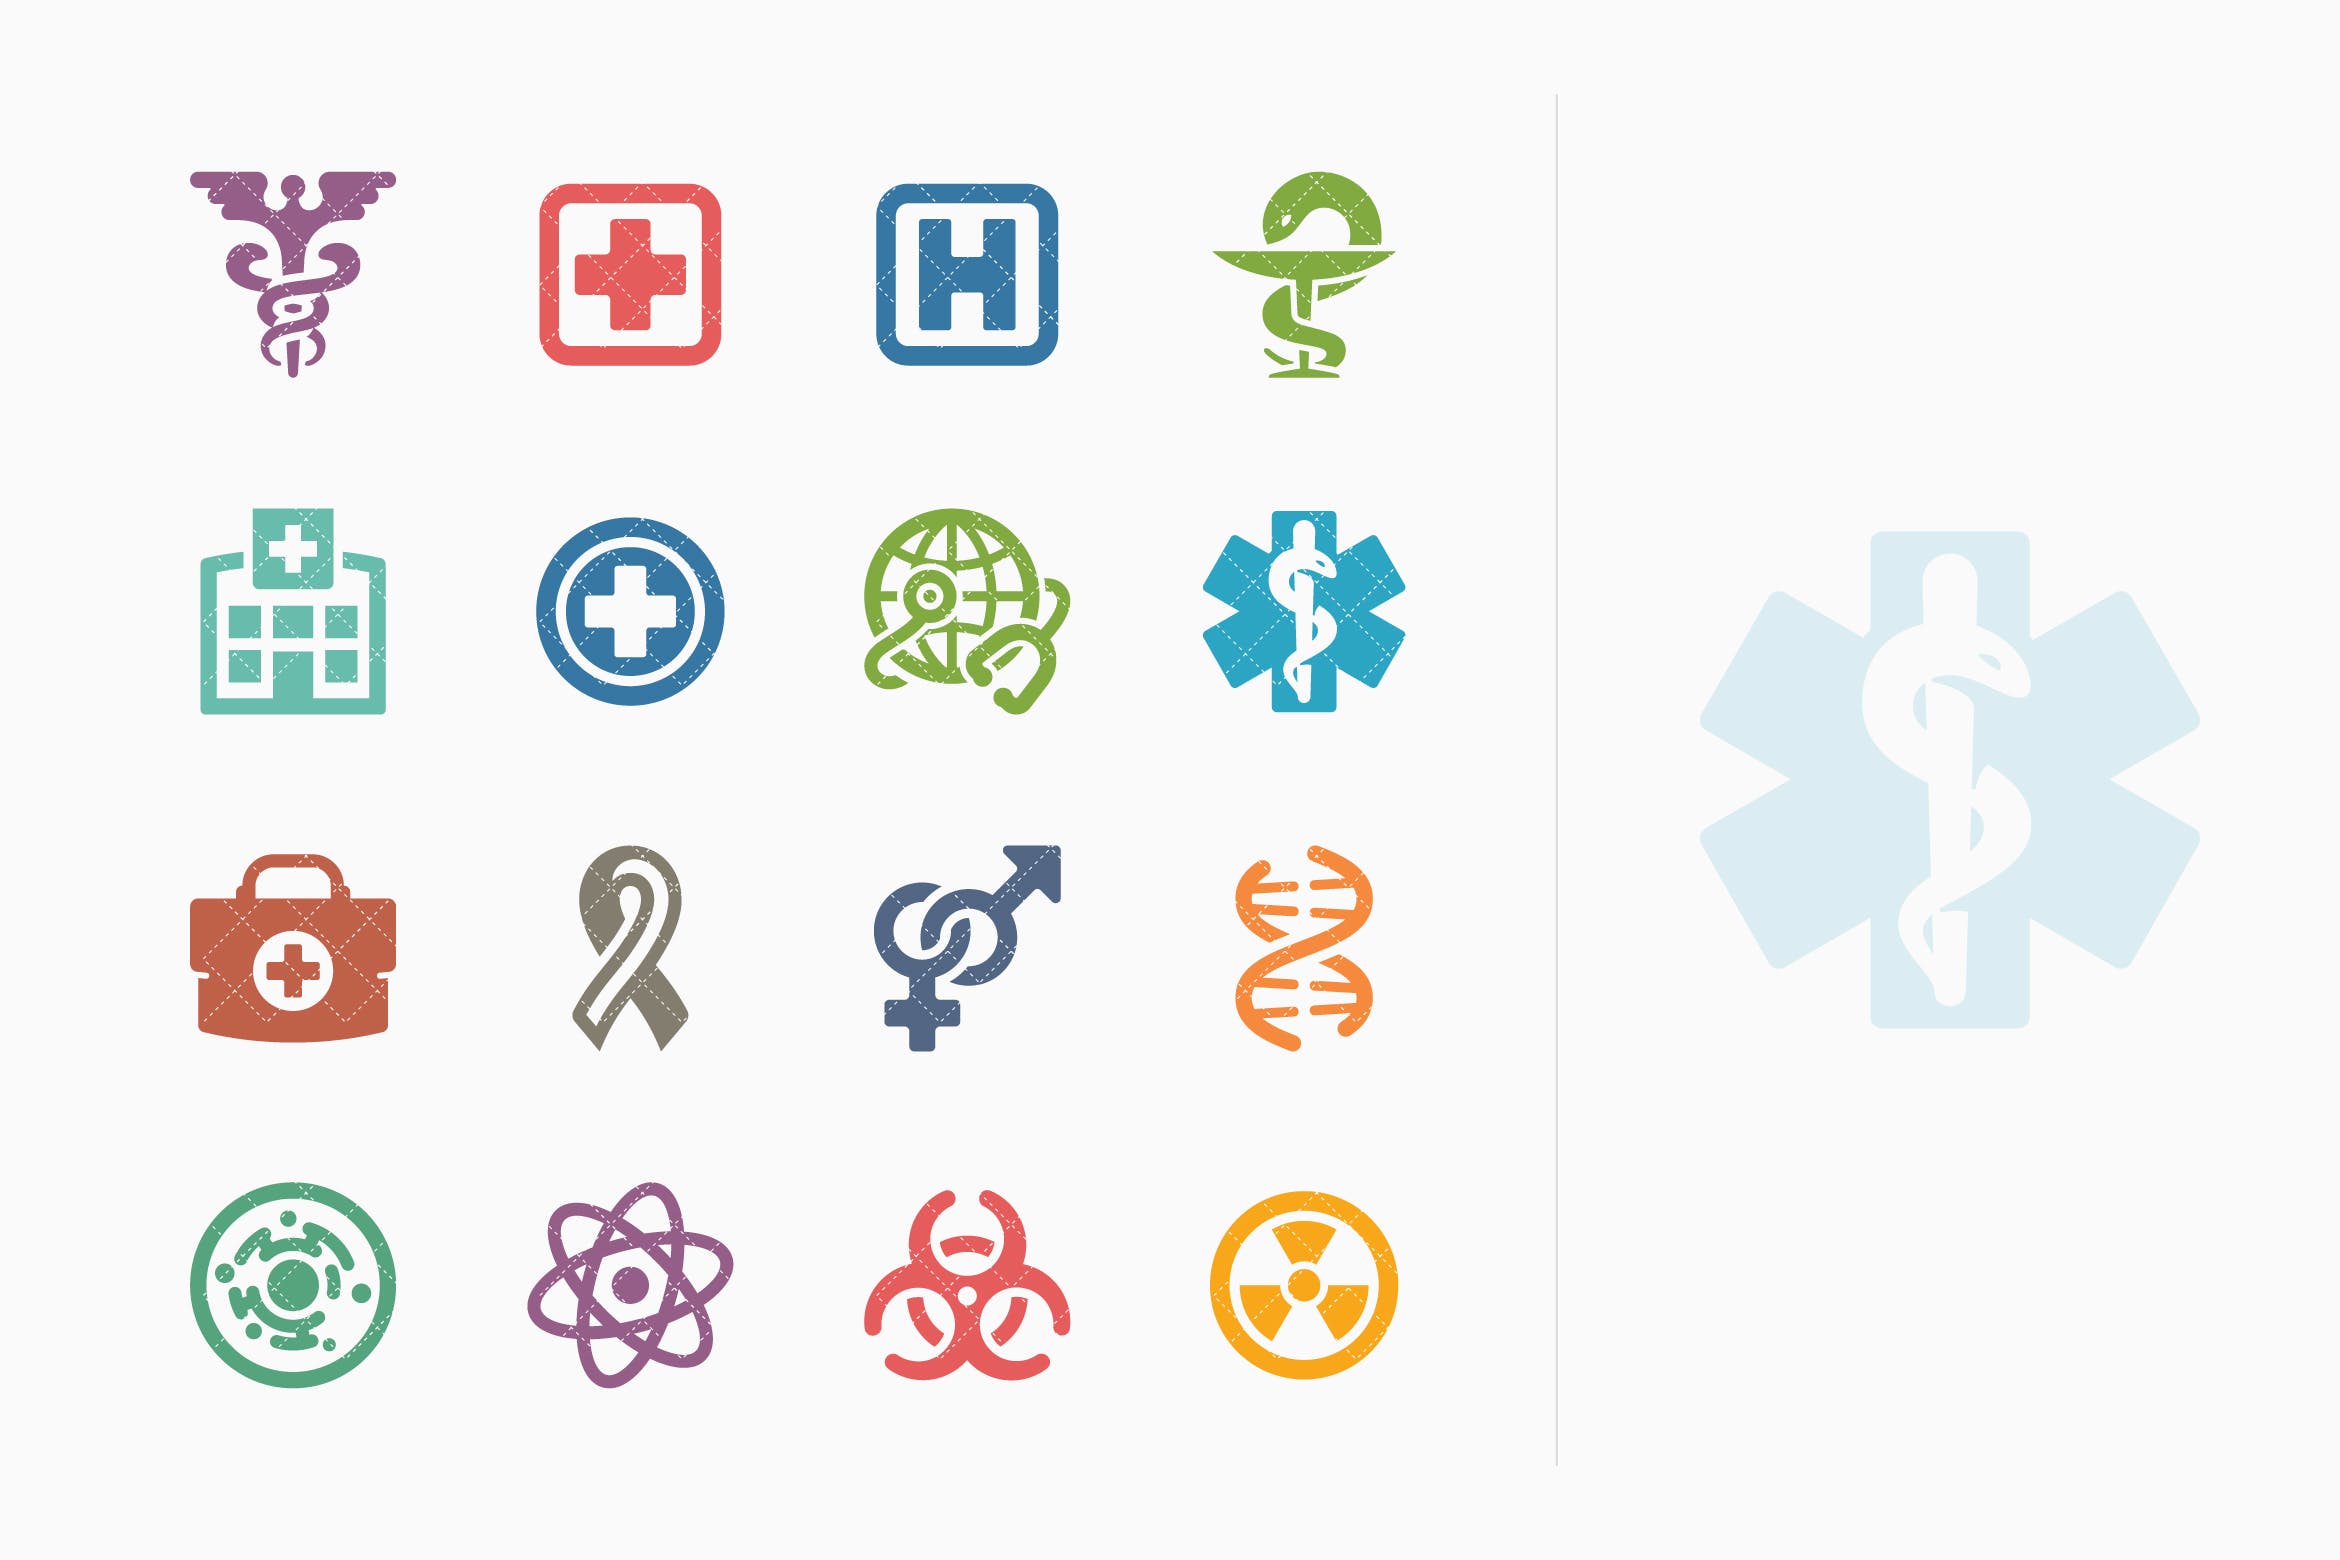 Colored系列-医疗保健主题矢量非凡图库精选图标集v1 Medical & Health Care Icons Set 1 – Colored Series插图